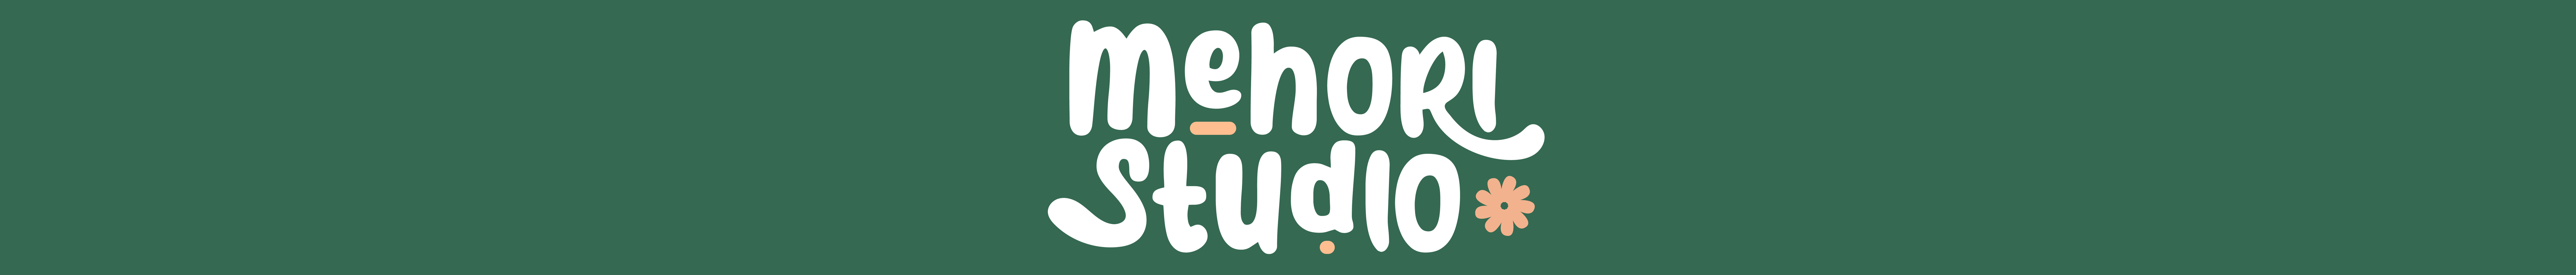 Mehori Studio profil başlığı